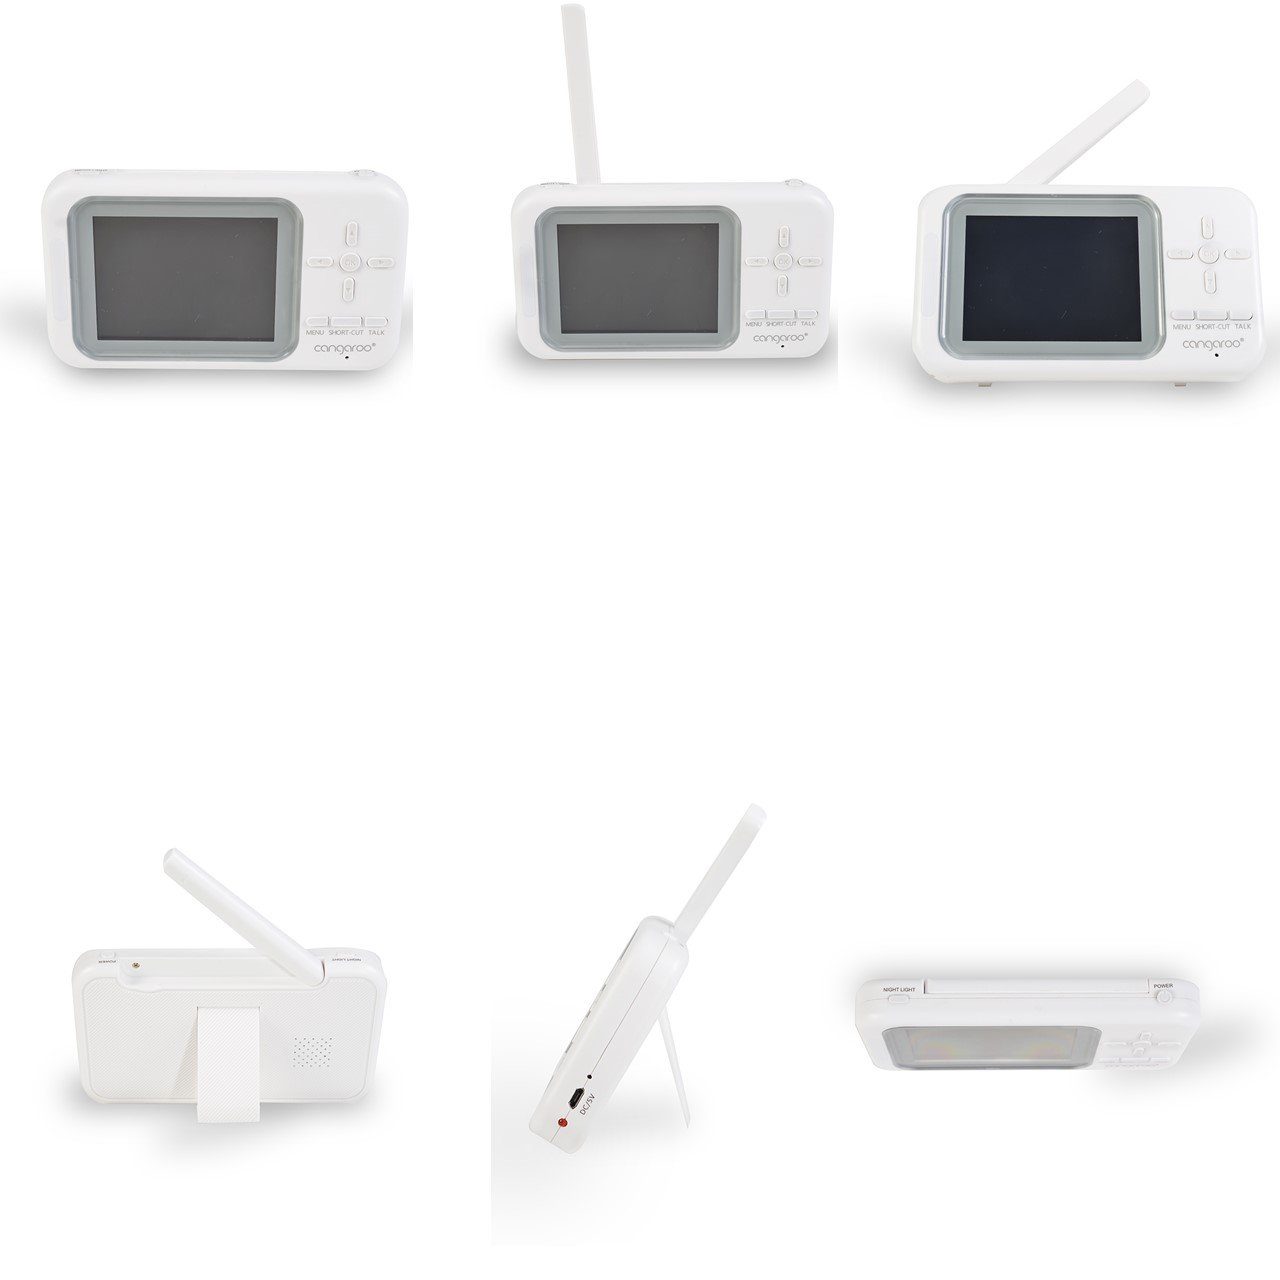 Temperaturanzeige Babyphone Focus Cangaroo 3,5", LCD-Farbdisplay, Video-Babyphone Kamera